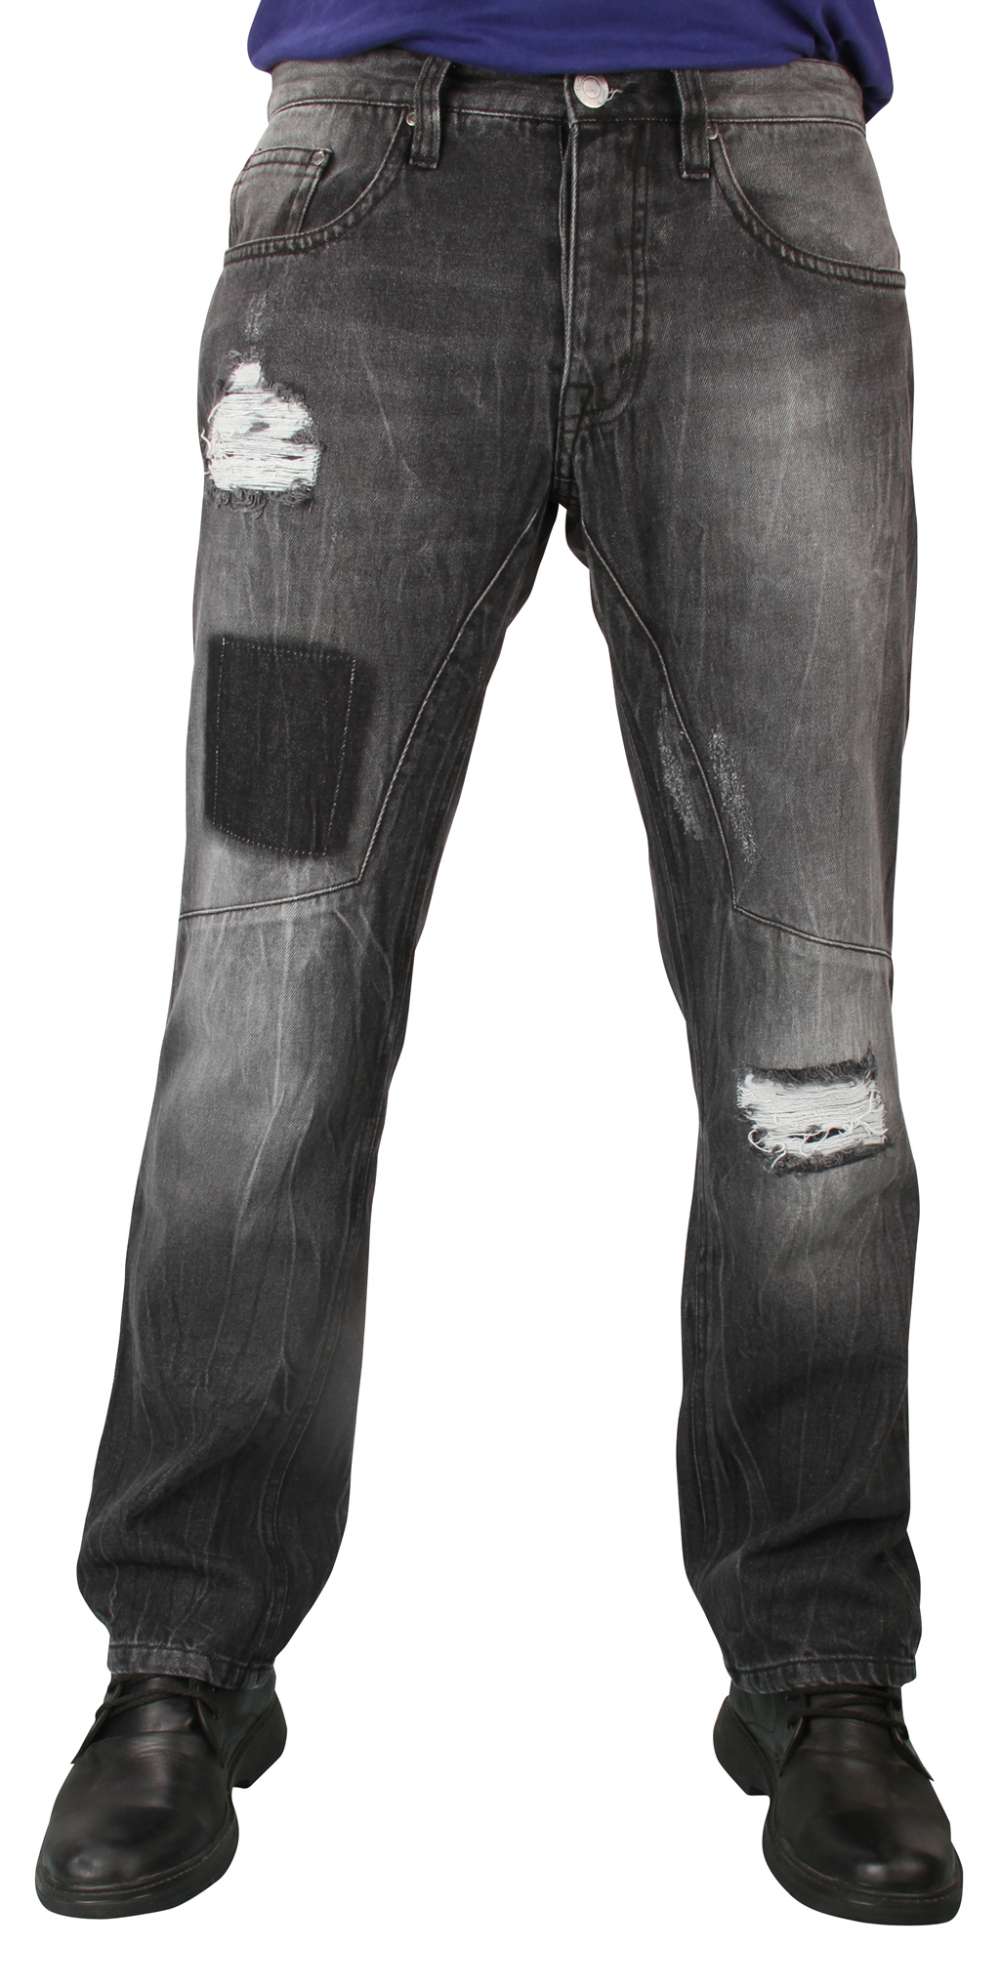 Black Distressed Jeans Mens High Quality 100% Cotton FGL-252